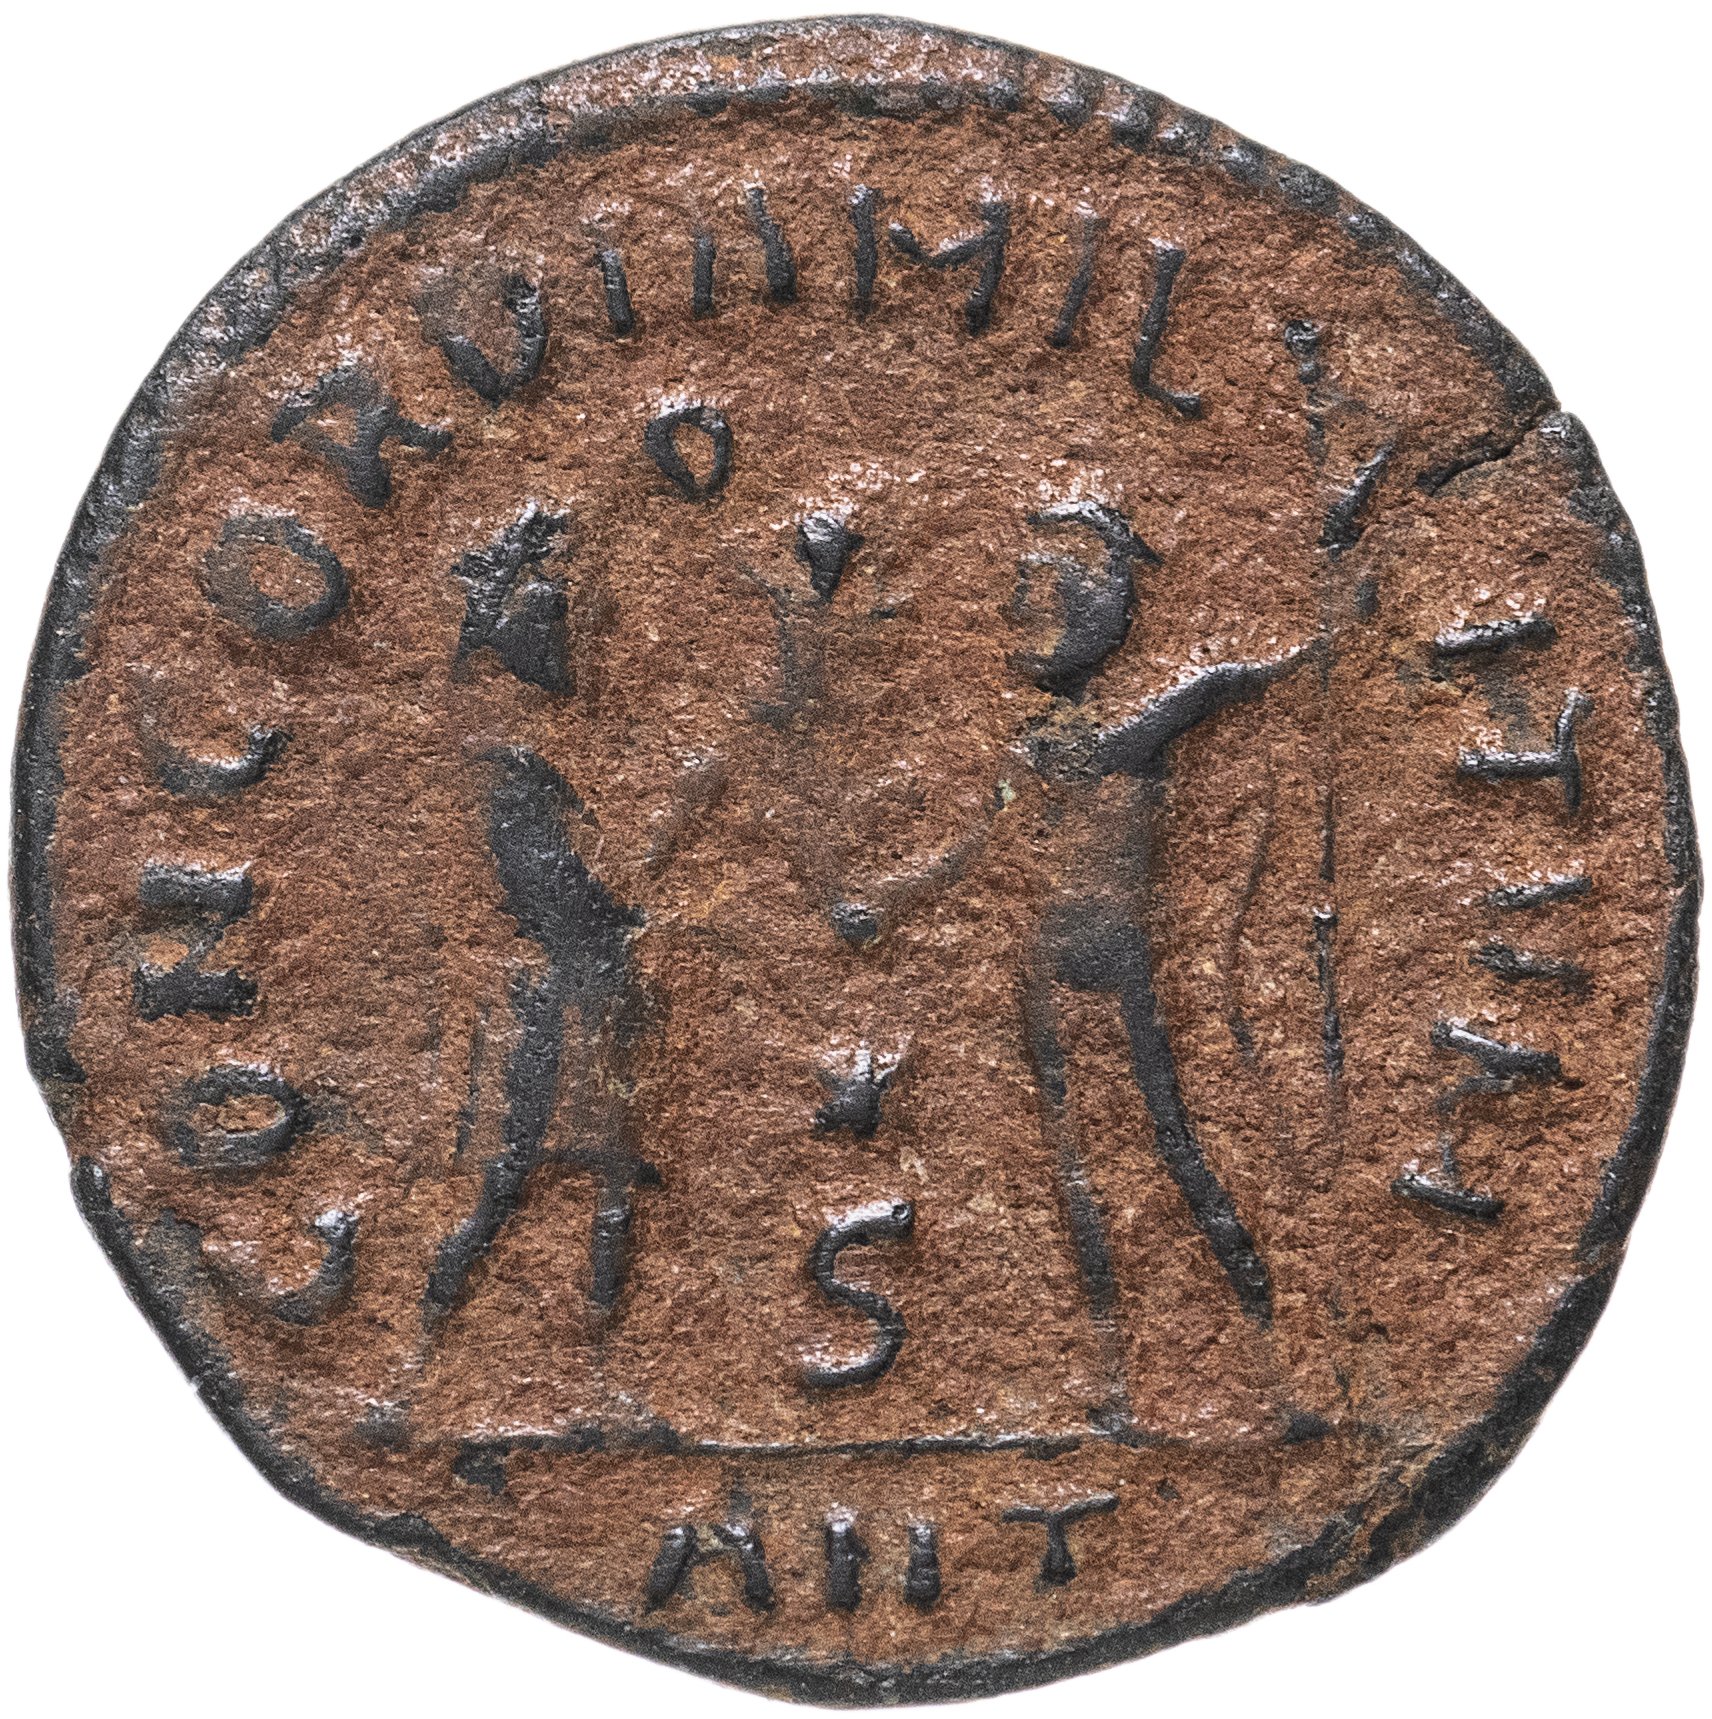 Максимиан Геркулий. Максимиан Геркулий монета. Максимиан Геркулий 1 антониан. Римская монета 286 - 305. Римская монета 3